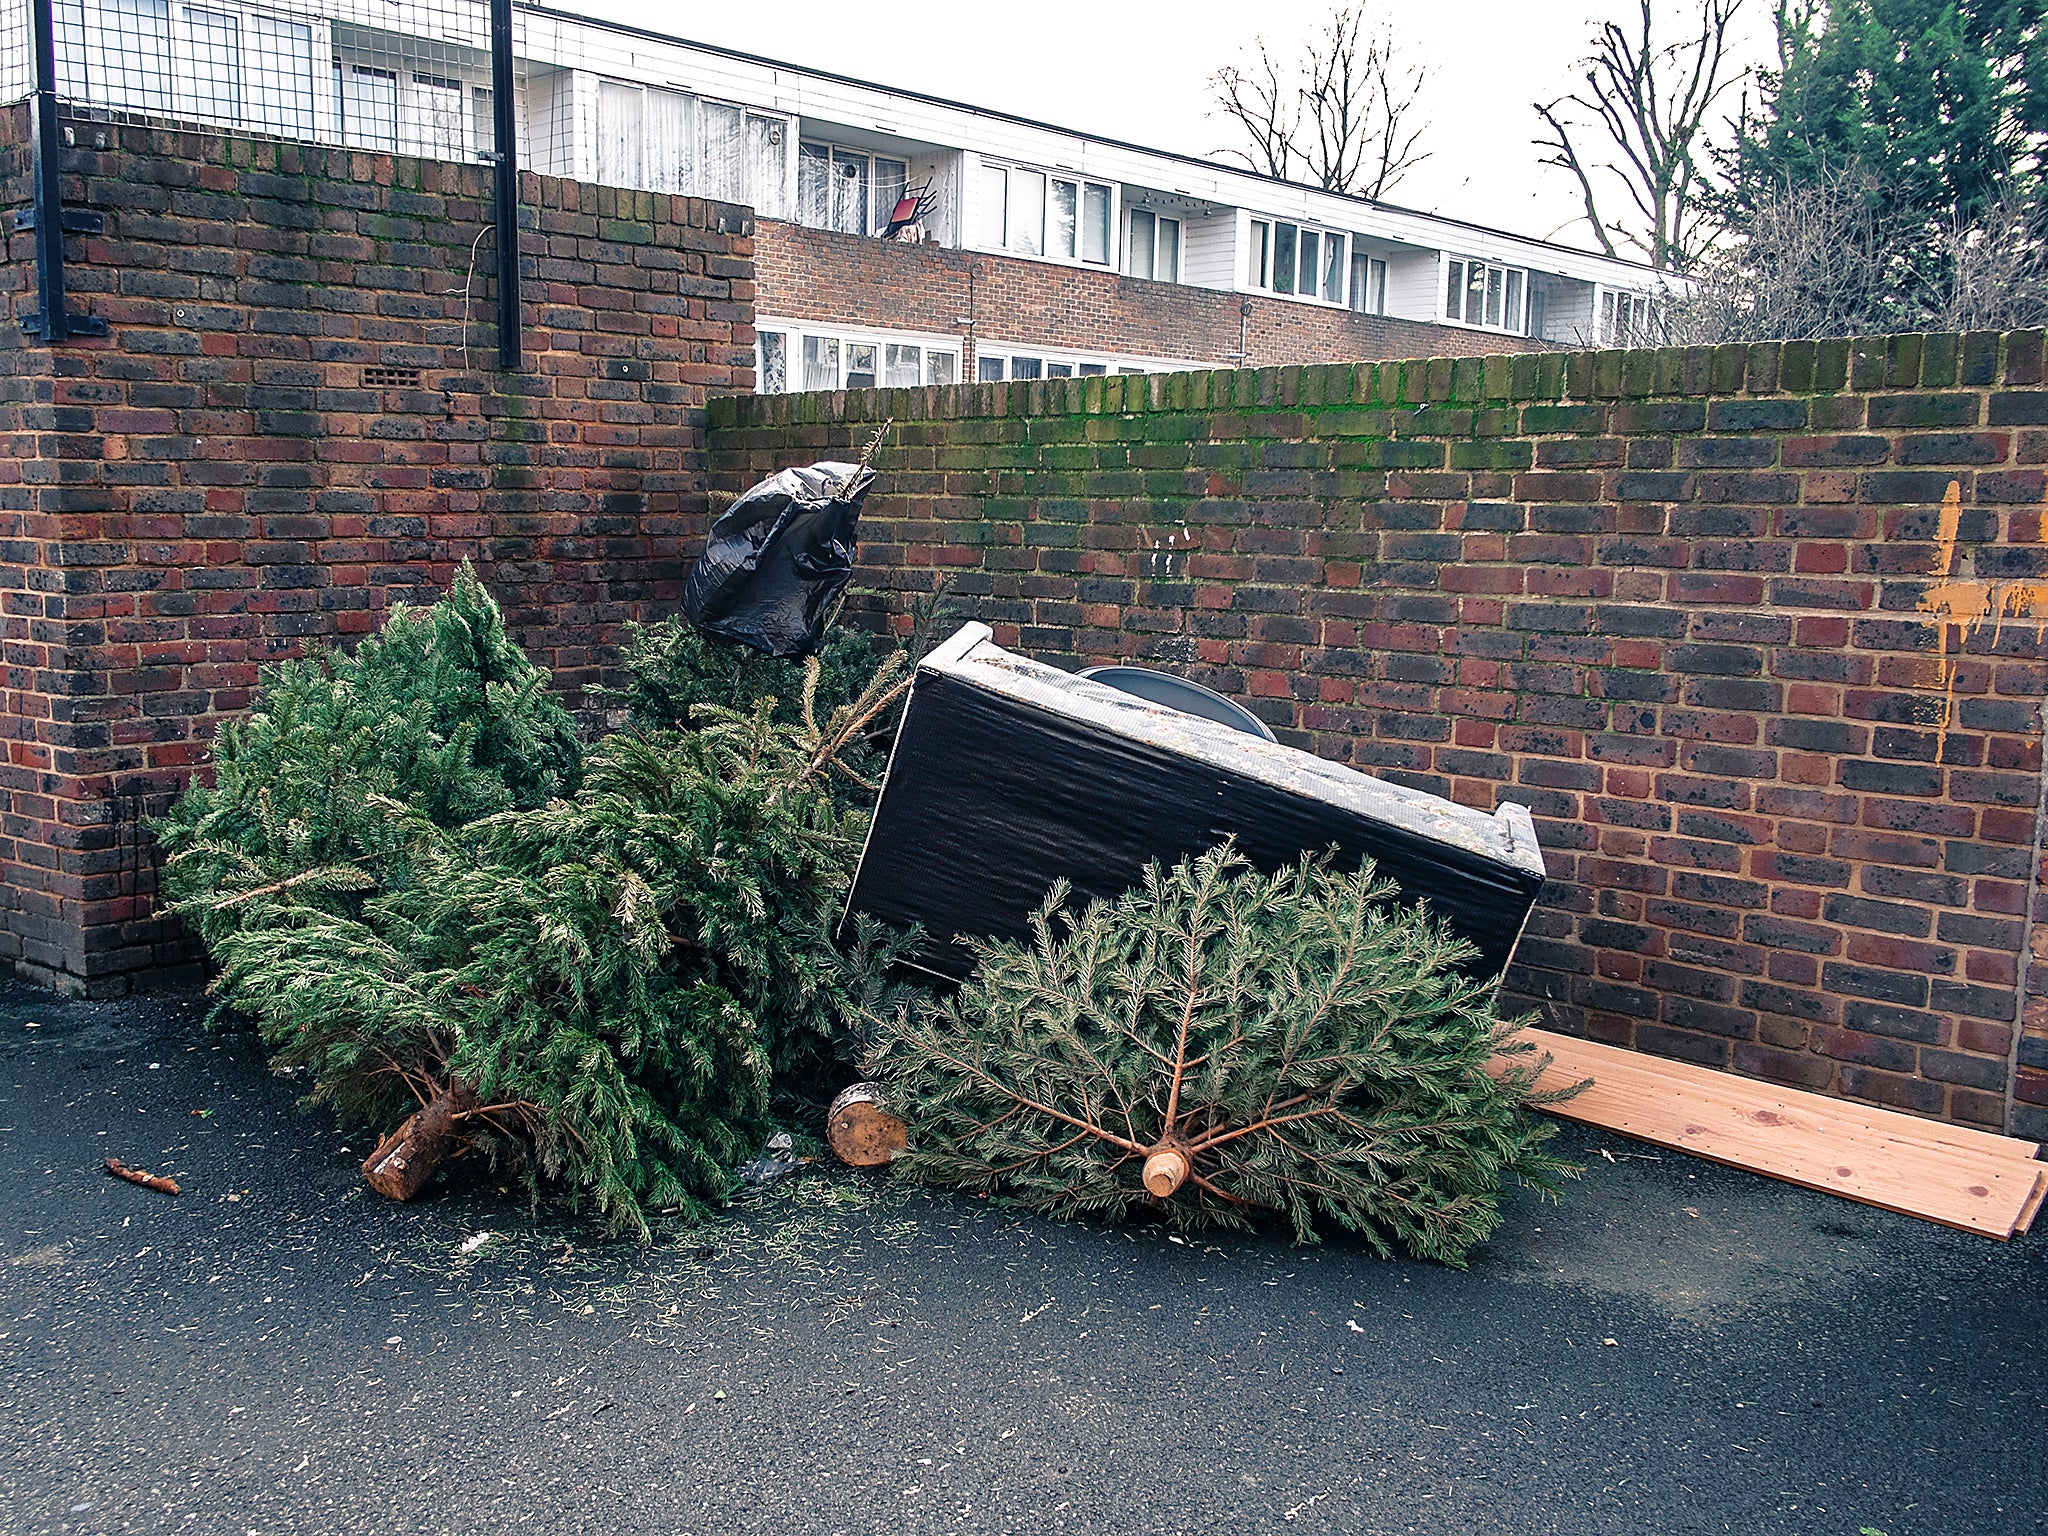 Christmas trees lie amongst rubbish